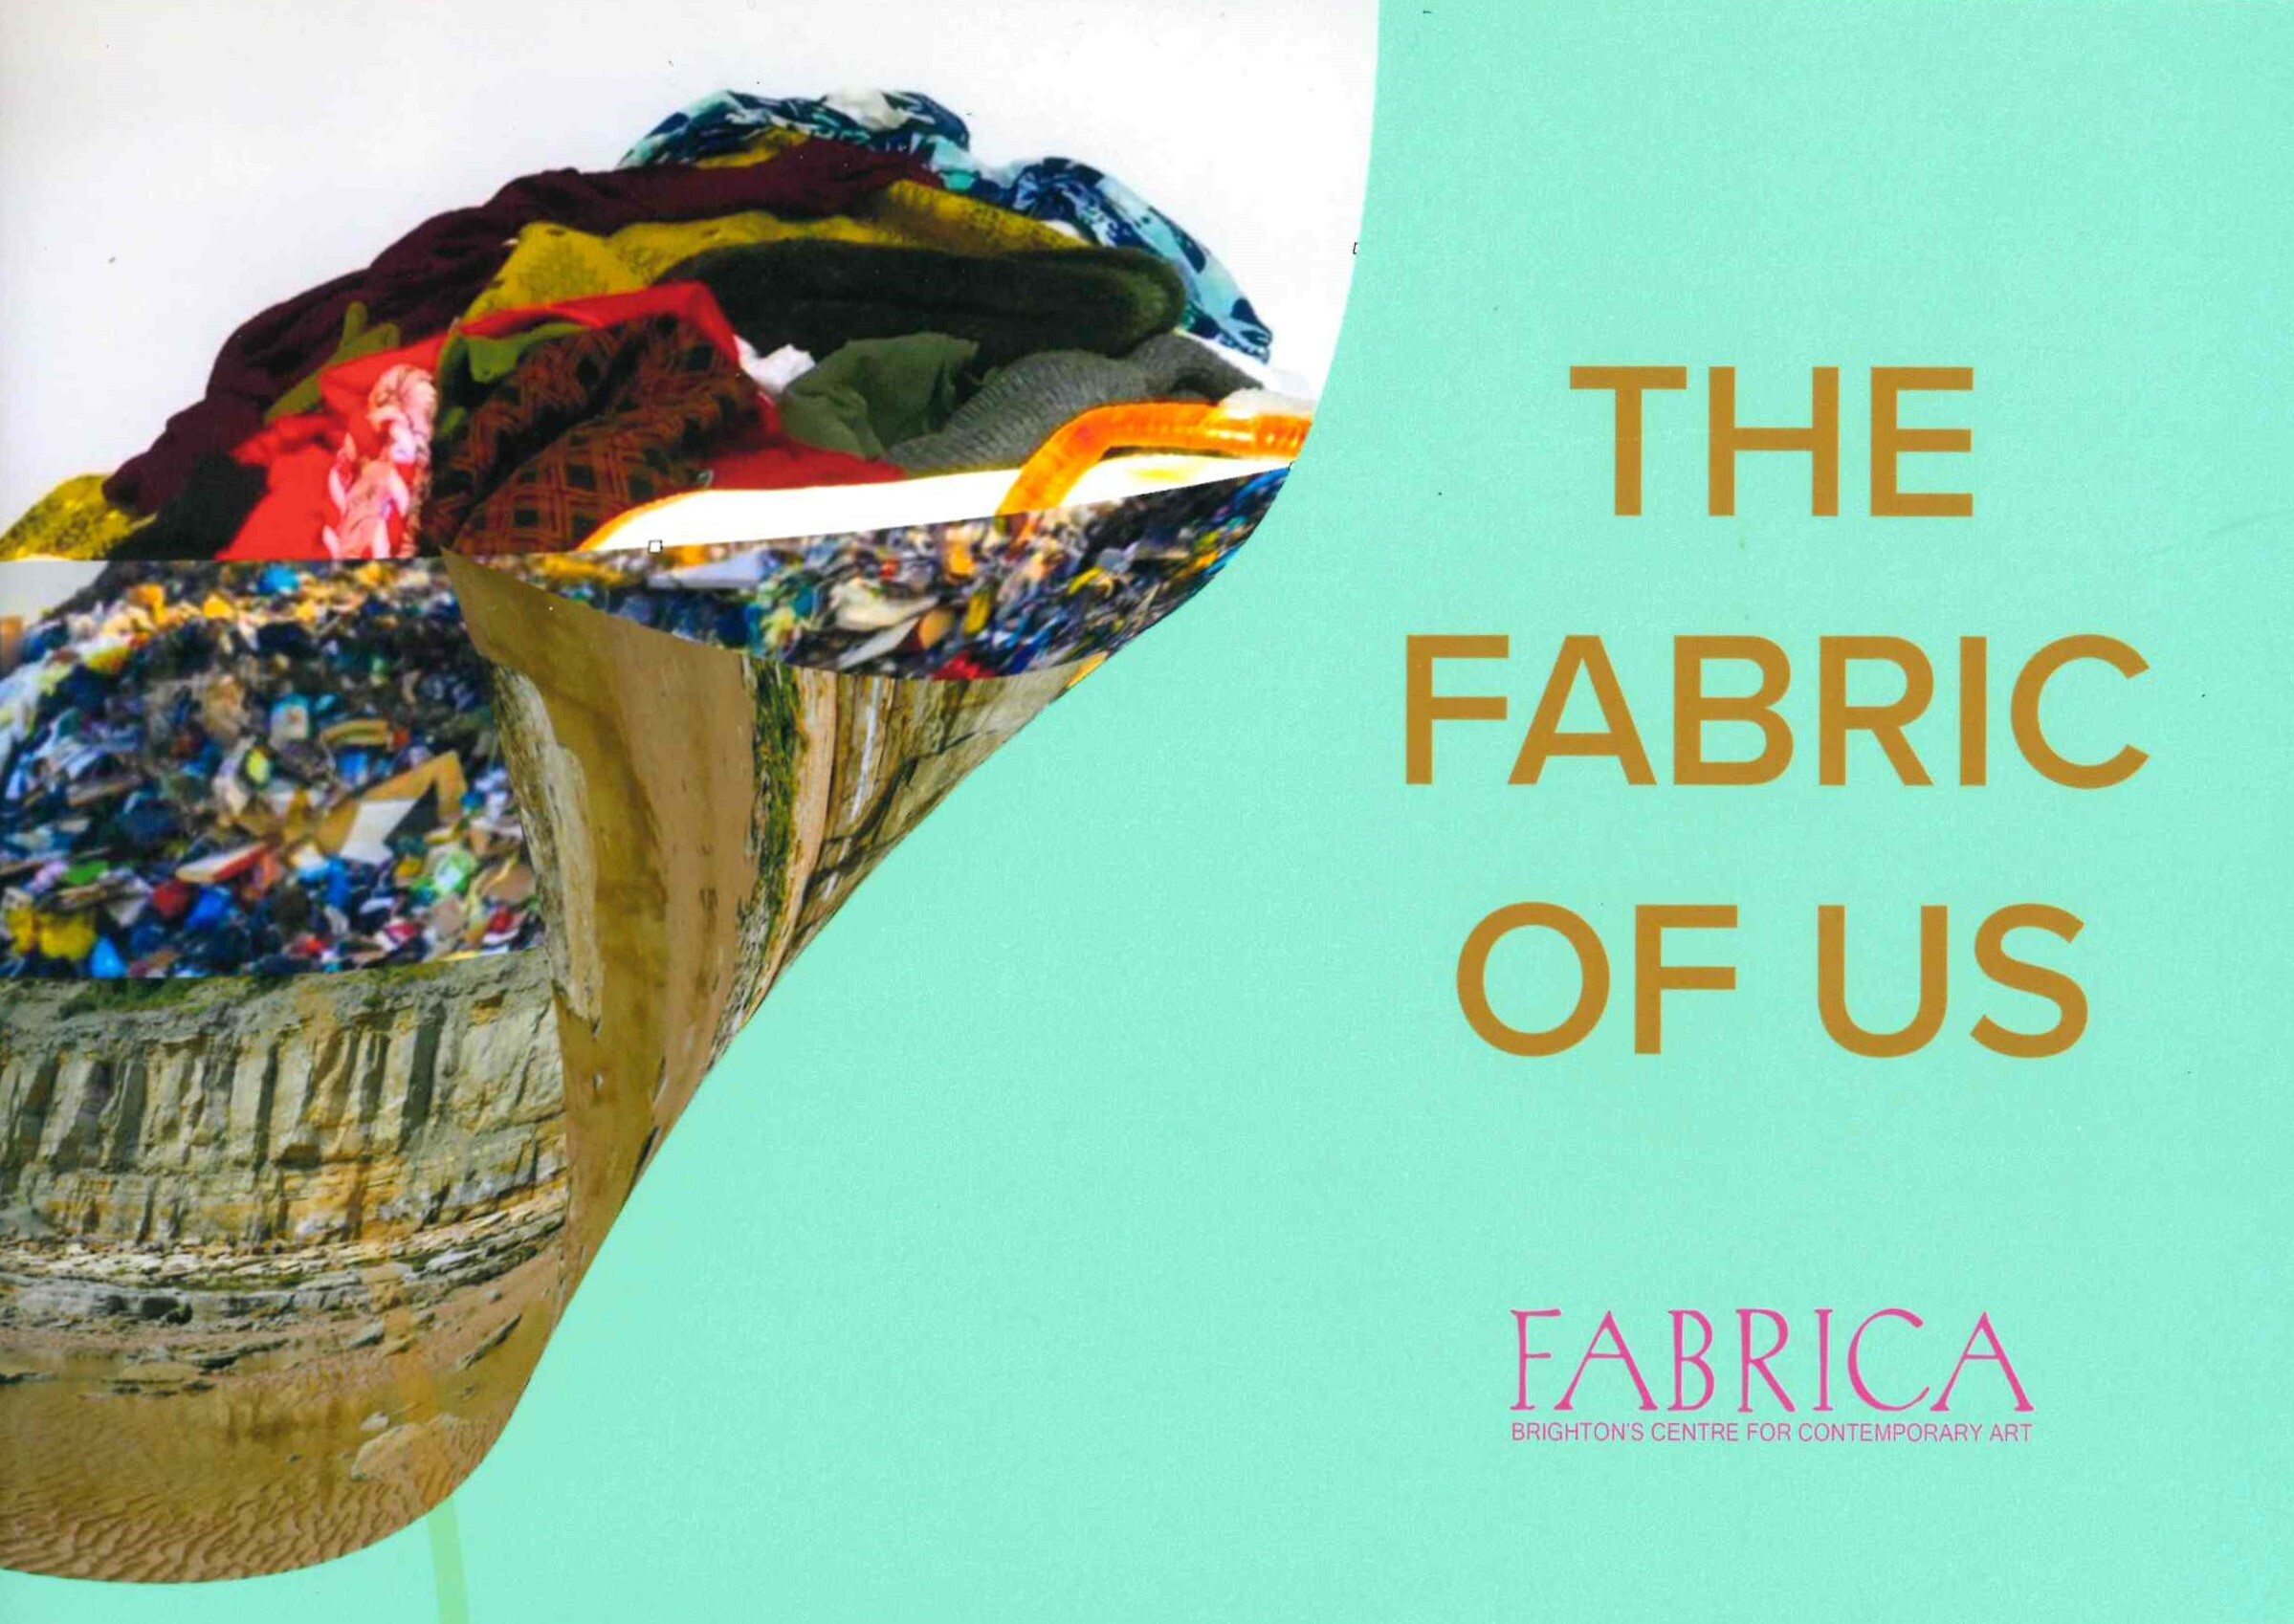 Response 36 Fabric of Us